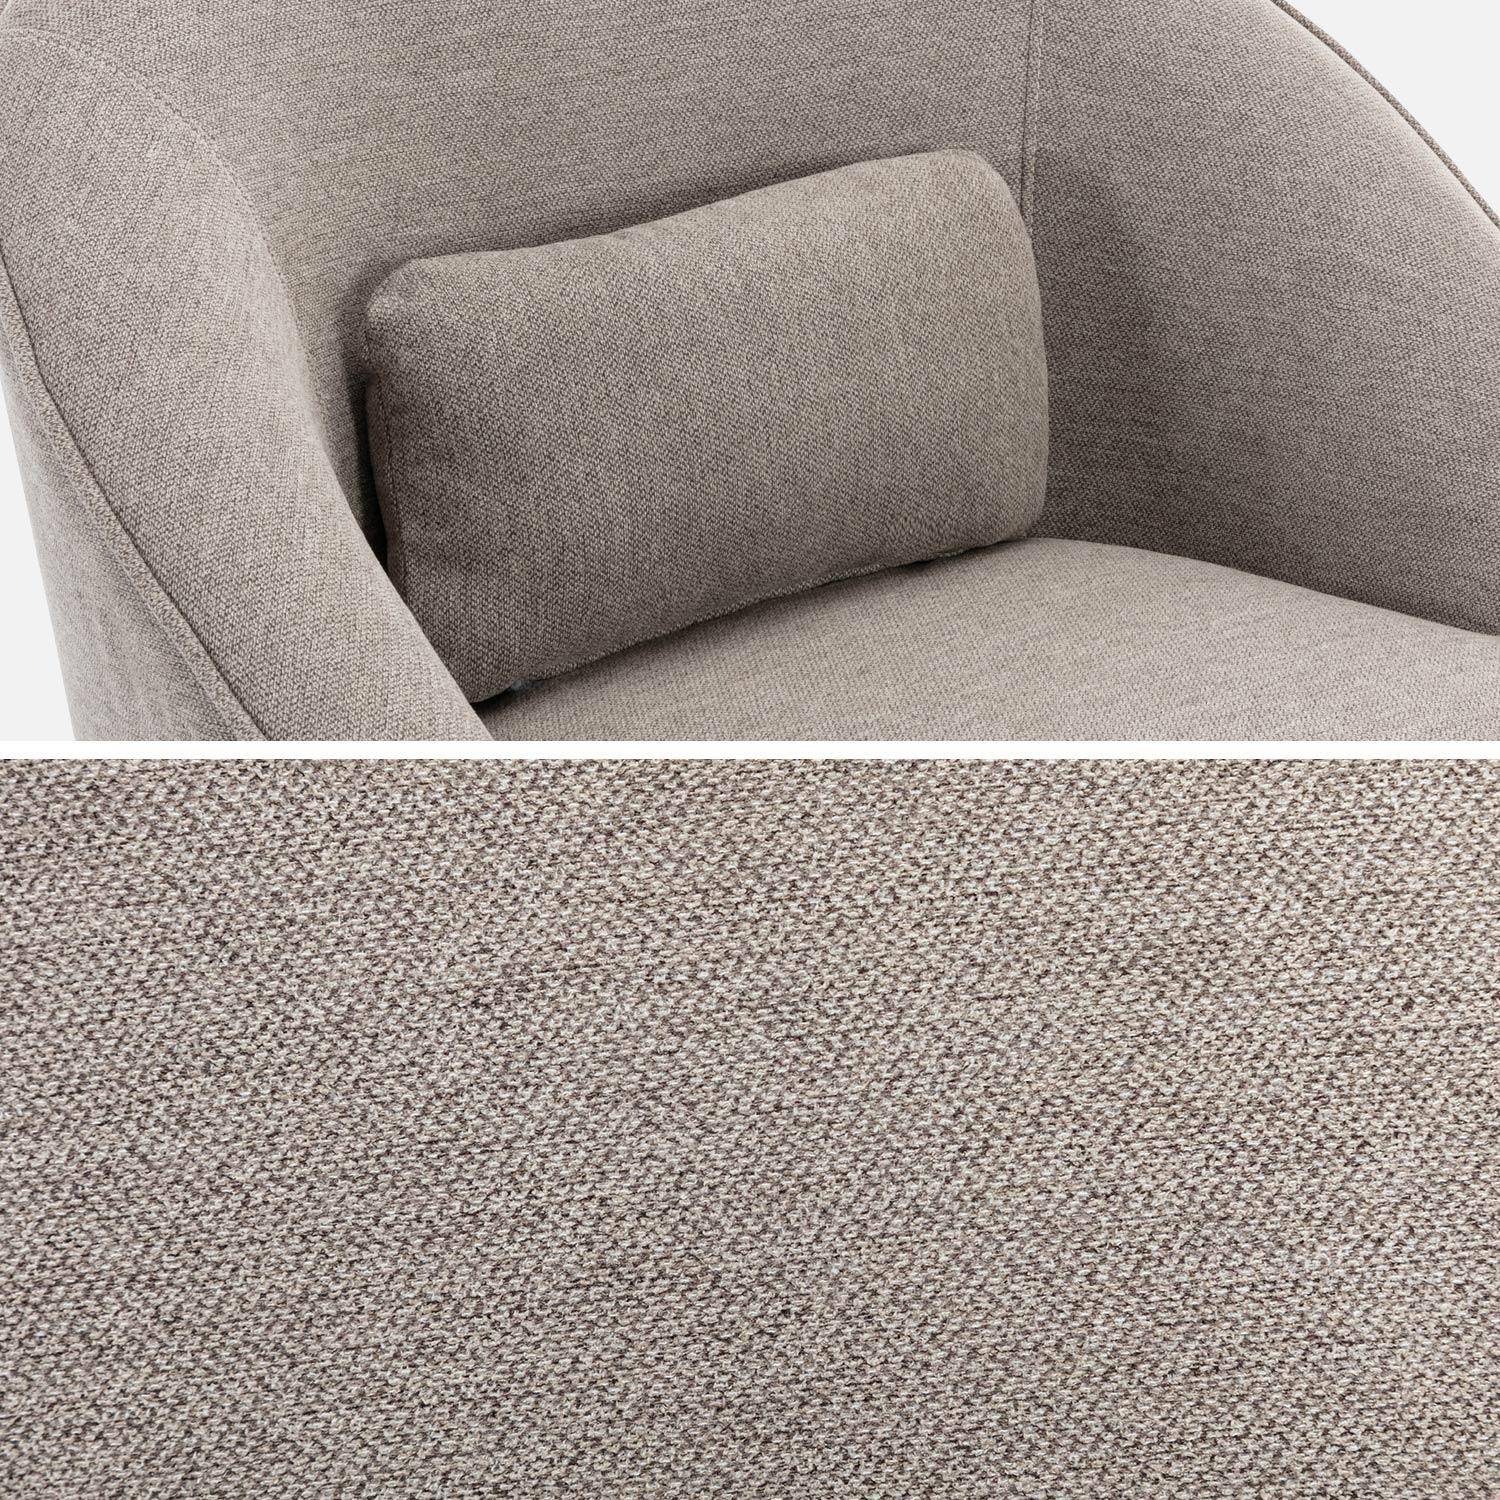 360° draaibare fauteuil, Lana, in taupe stof, met kussen B 80 x D 73 x H 77cm,sweeek,Photo8